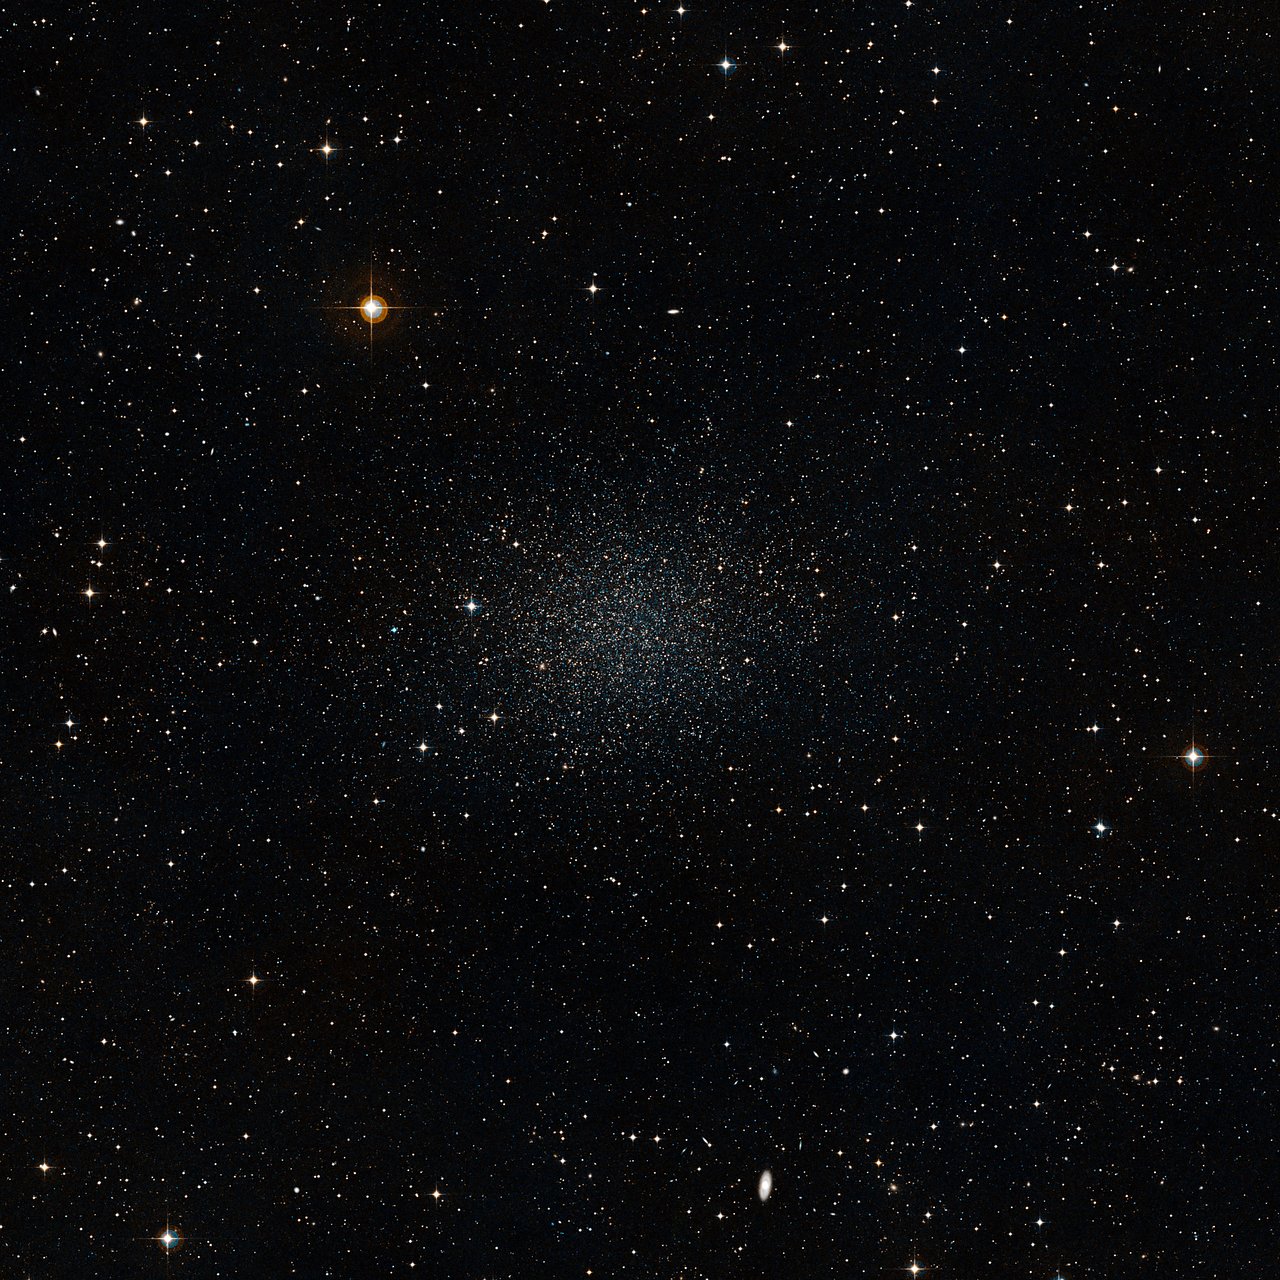 La Galassia Sculptor (FOTO ESO/Digitized Sky Survey 2)